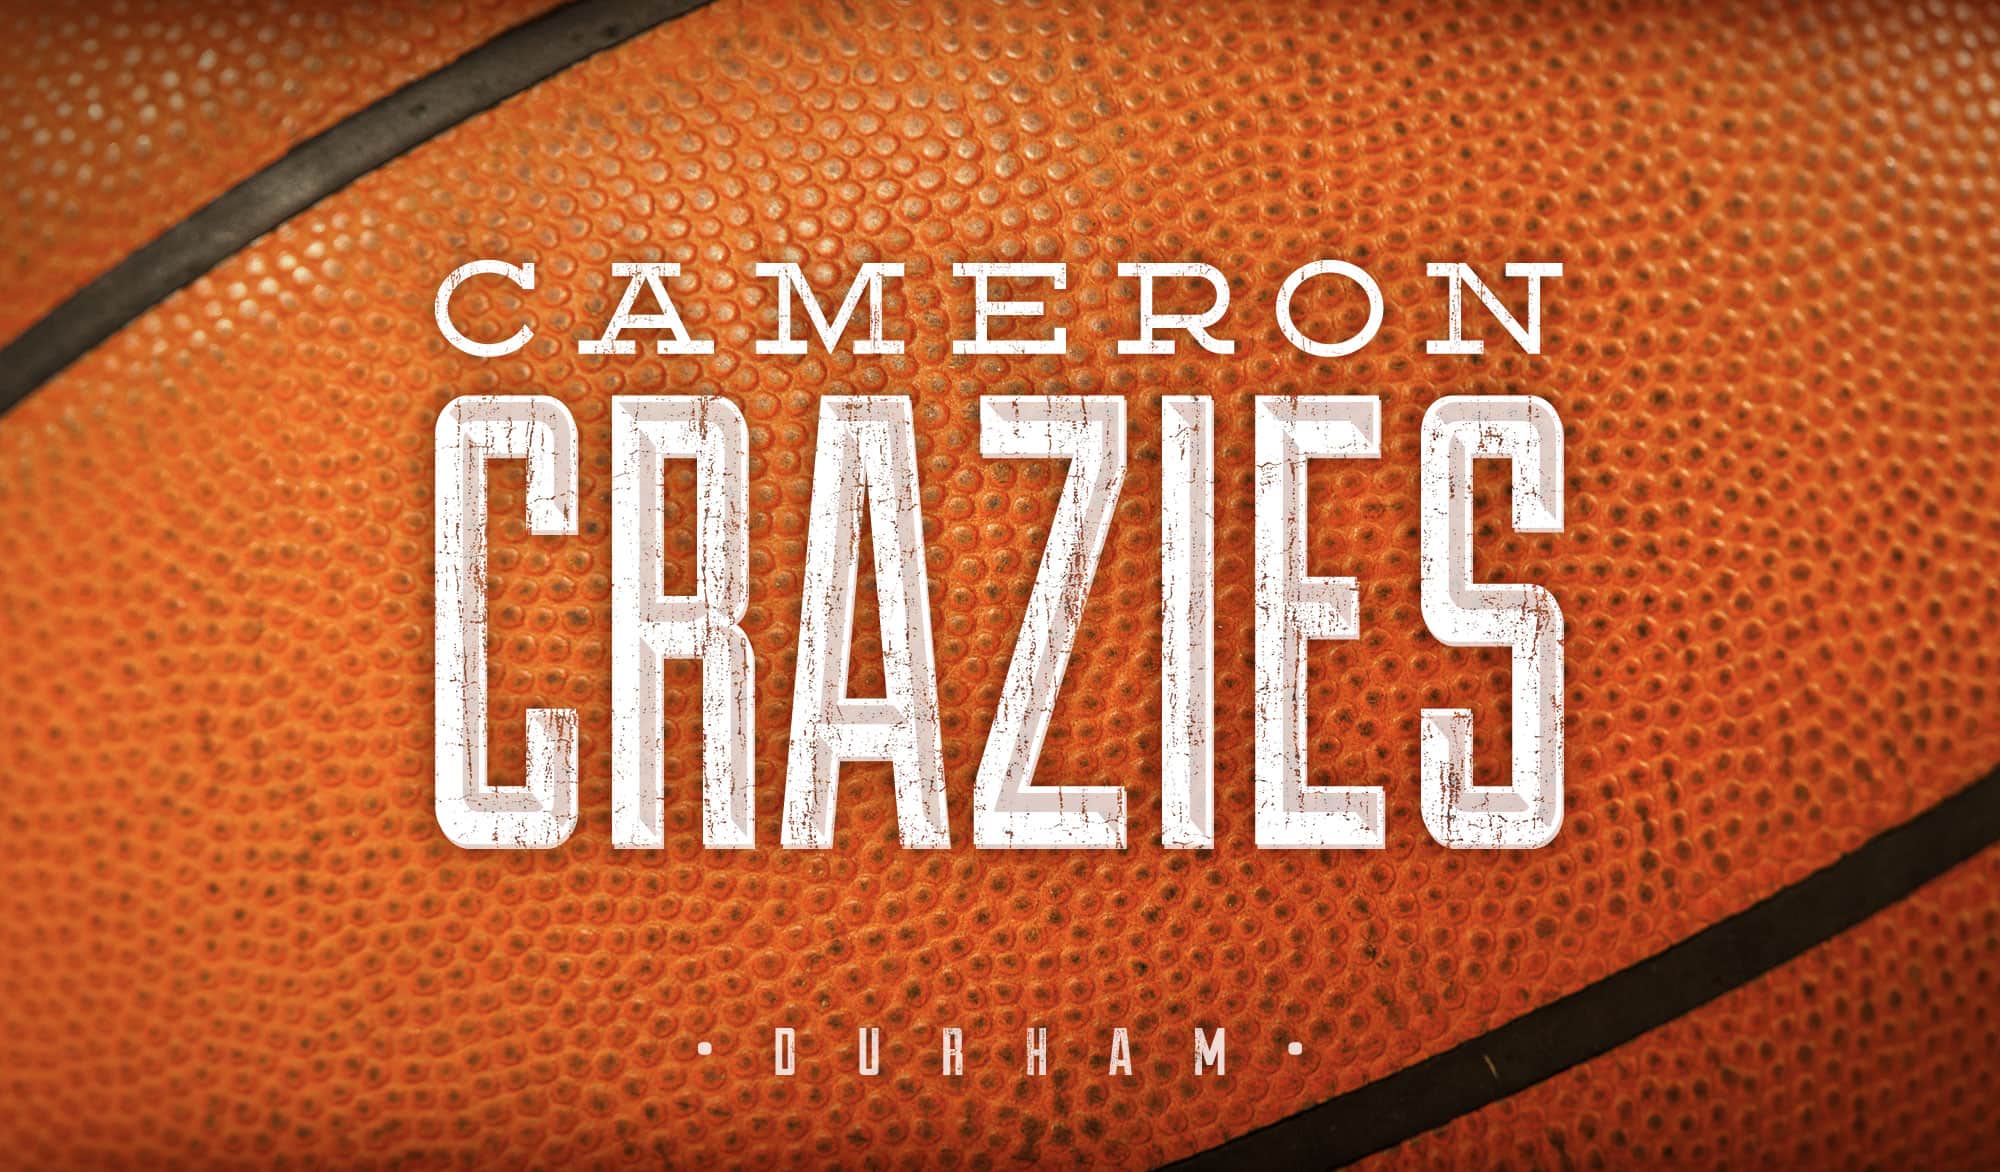 Cameron Crazies